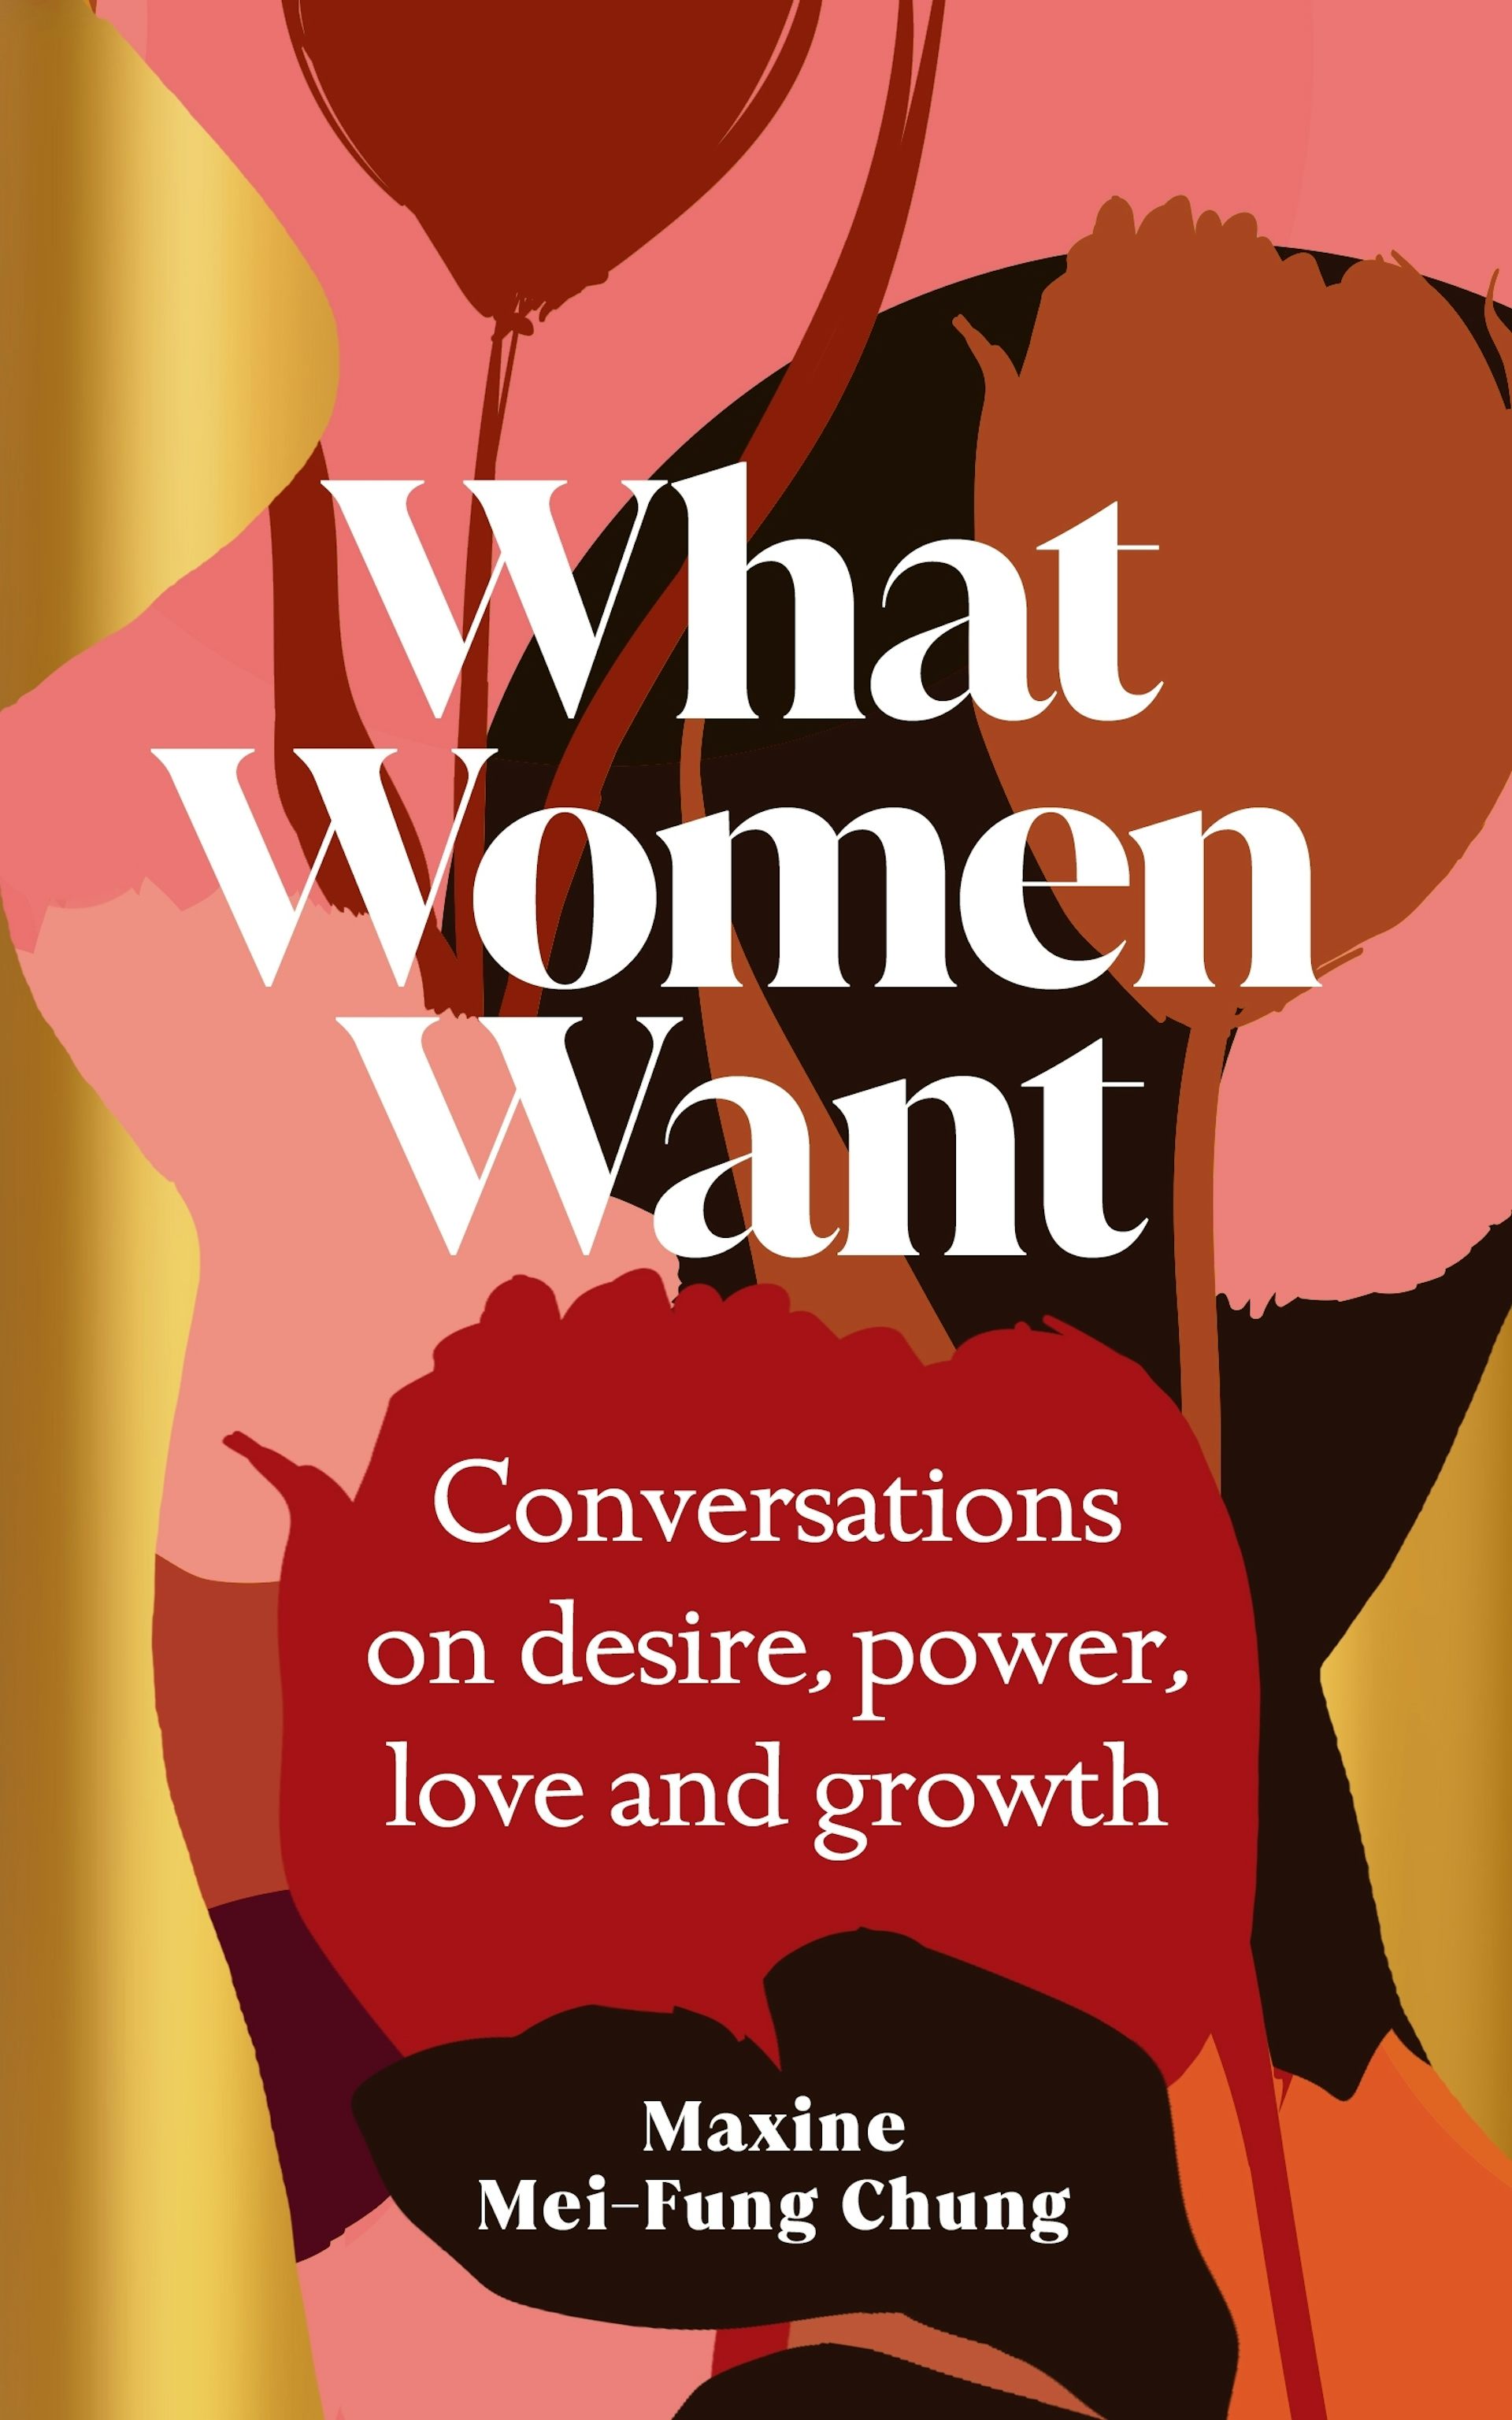 What do women want? Freuds infamous question invites voyeurism image